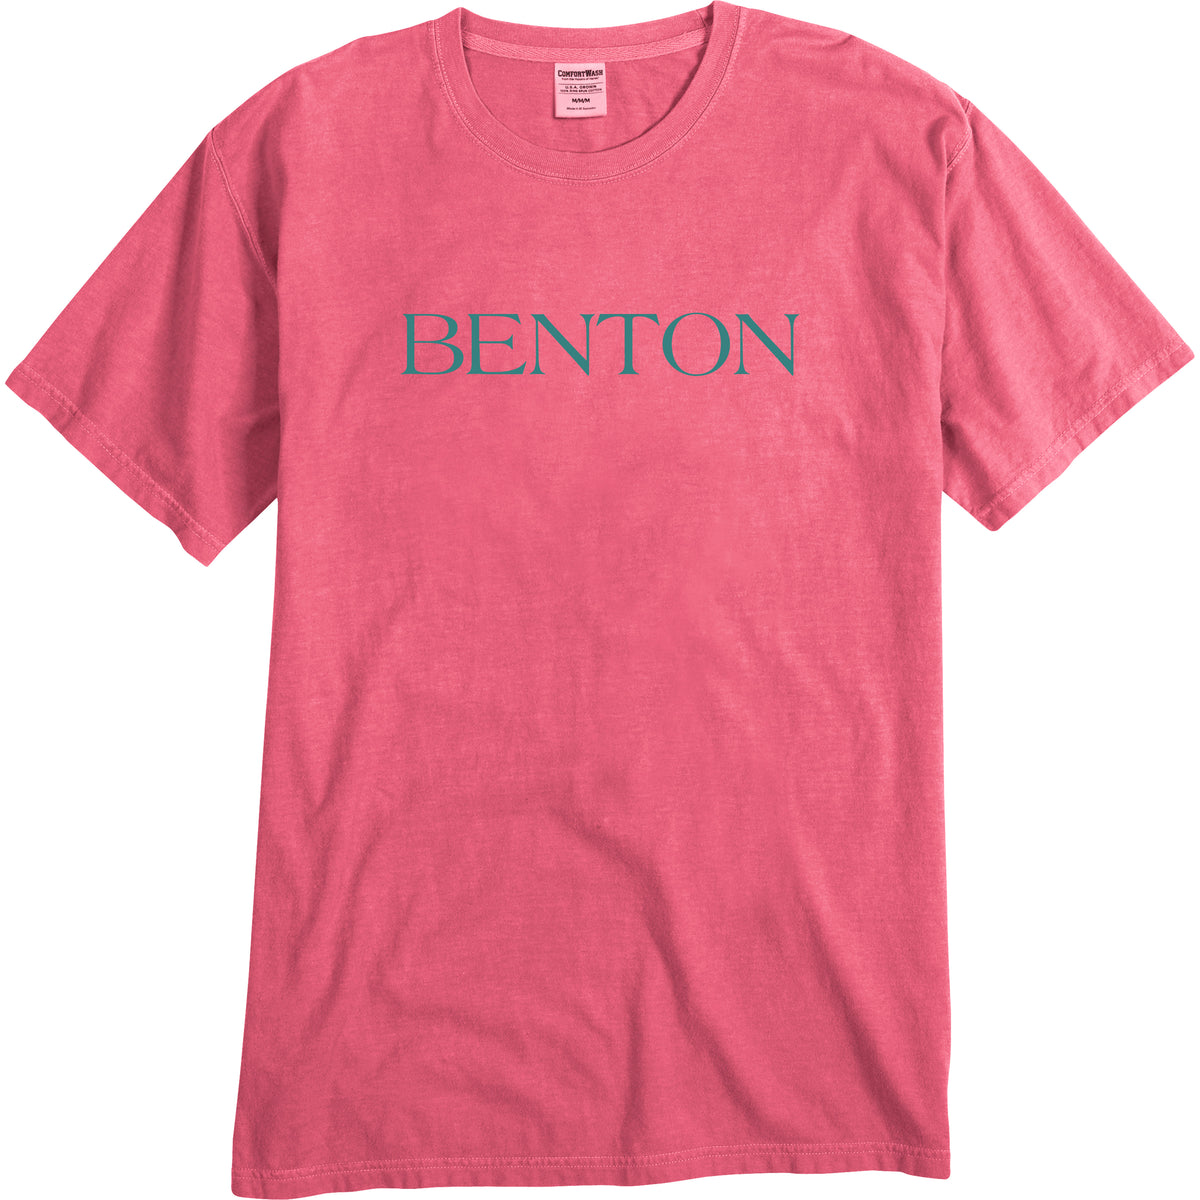 By The Sea Benton watermelon/mint T-Shirt